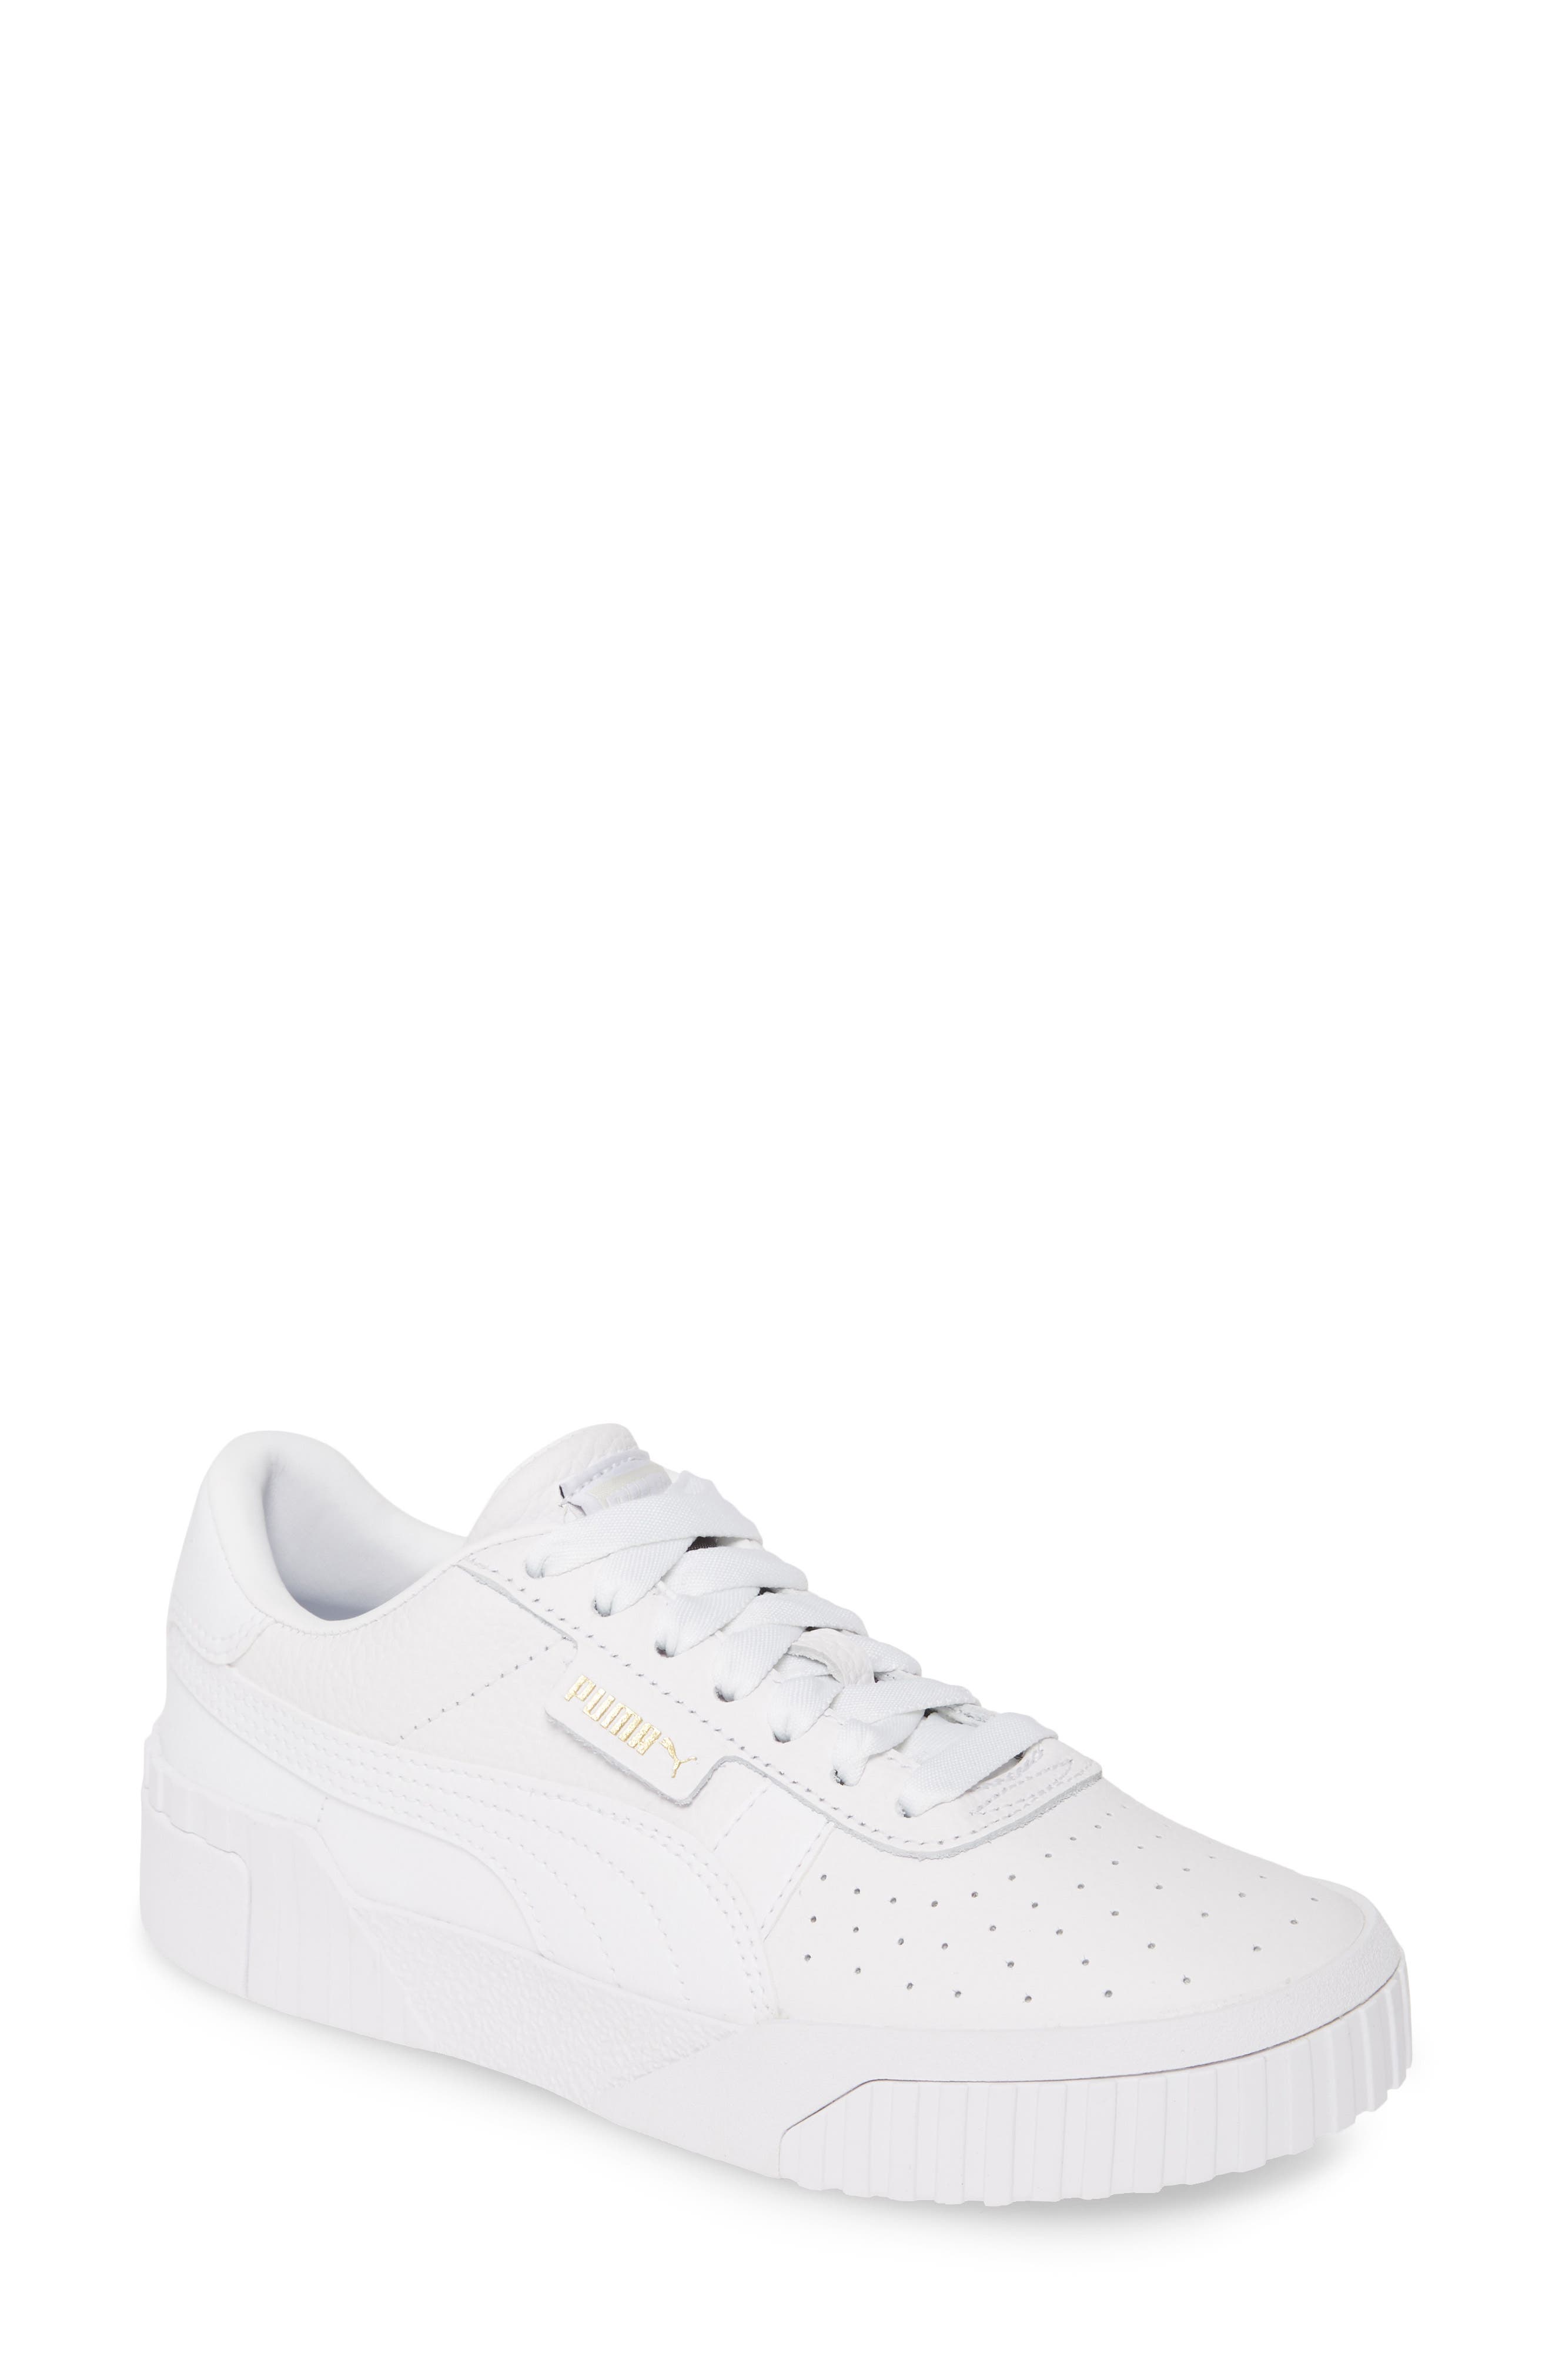 all white puma shoes